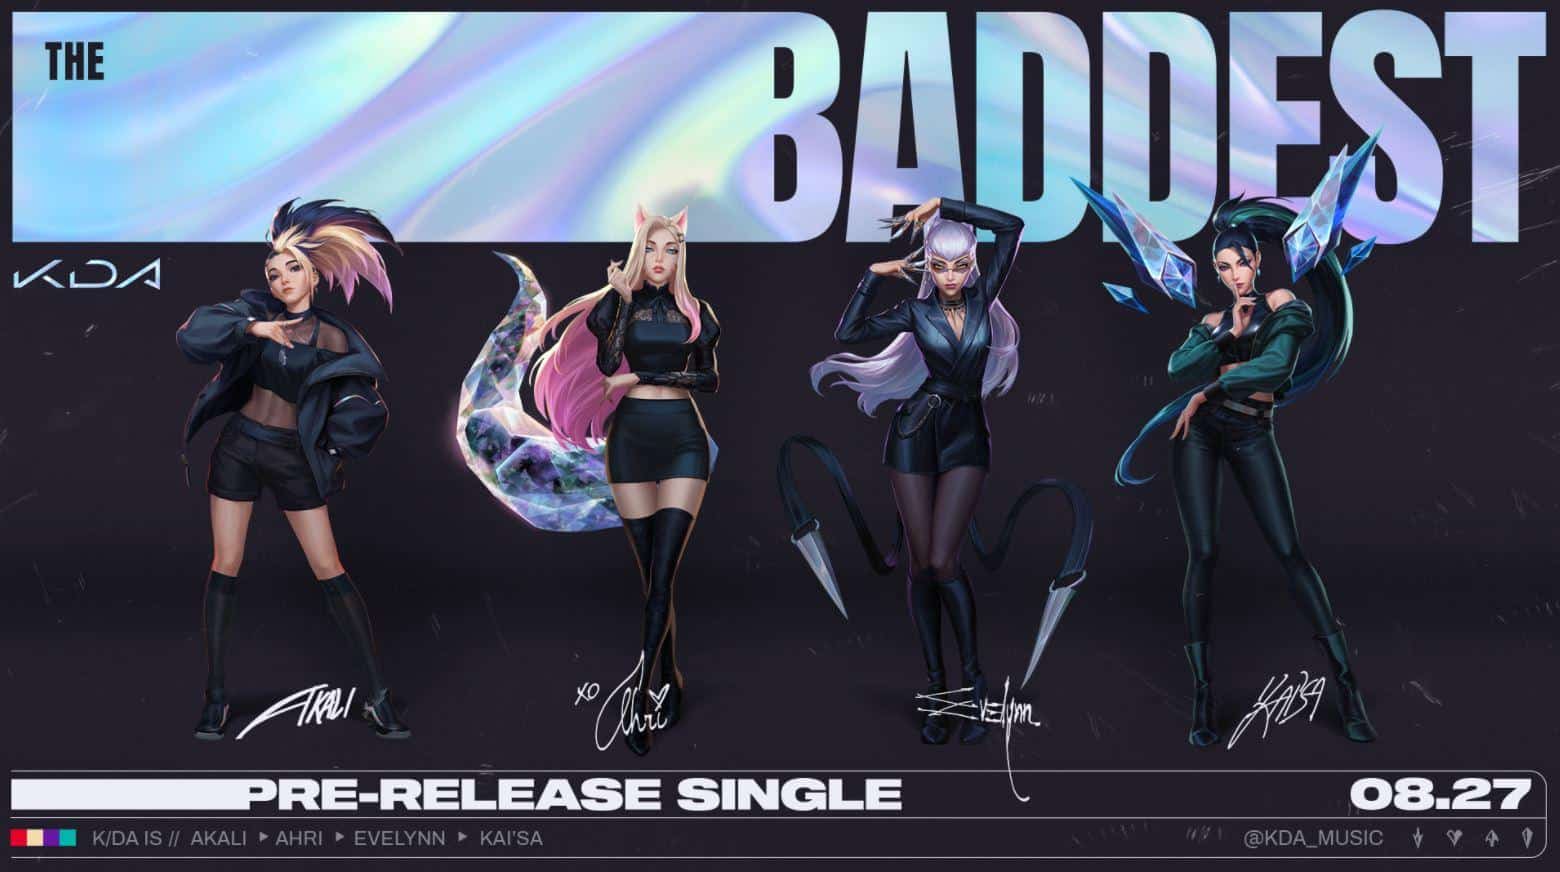 K/DA Returns With "The Baddest"